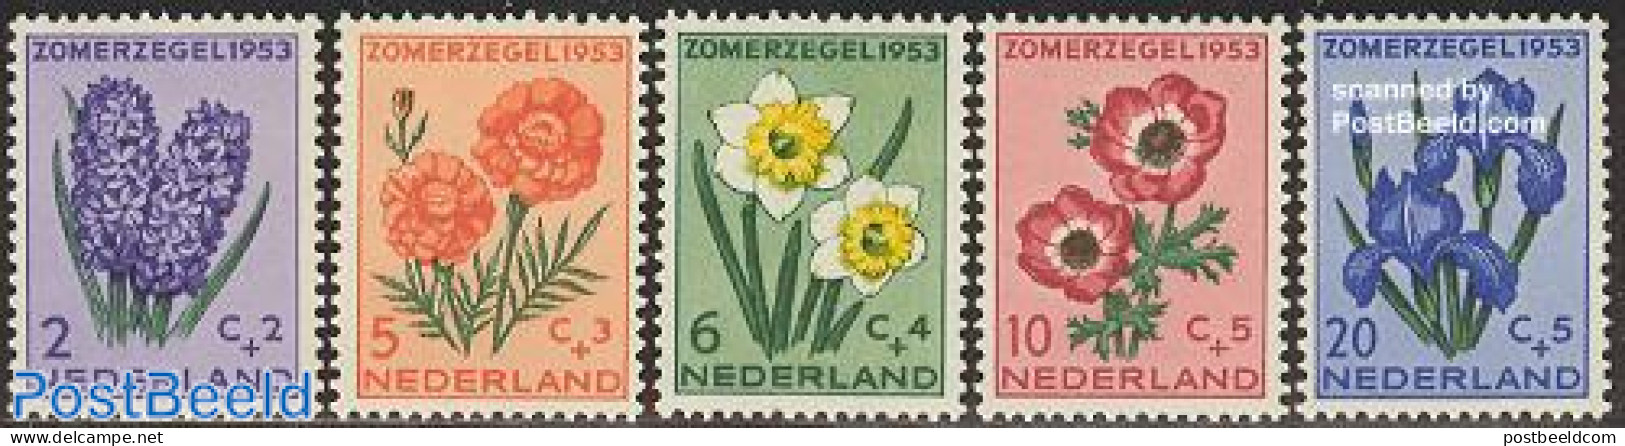 Netherlands 1953 Summer, Flowers 5v, Mint NH, Nature - Flowers & Plants - Unused Stamps